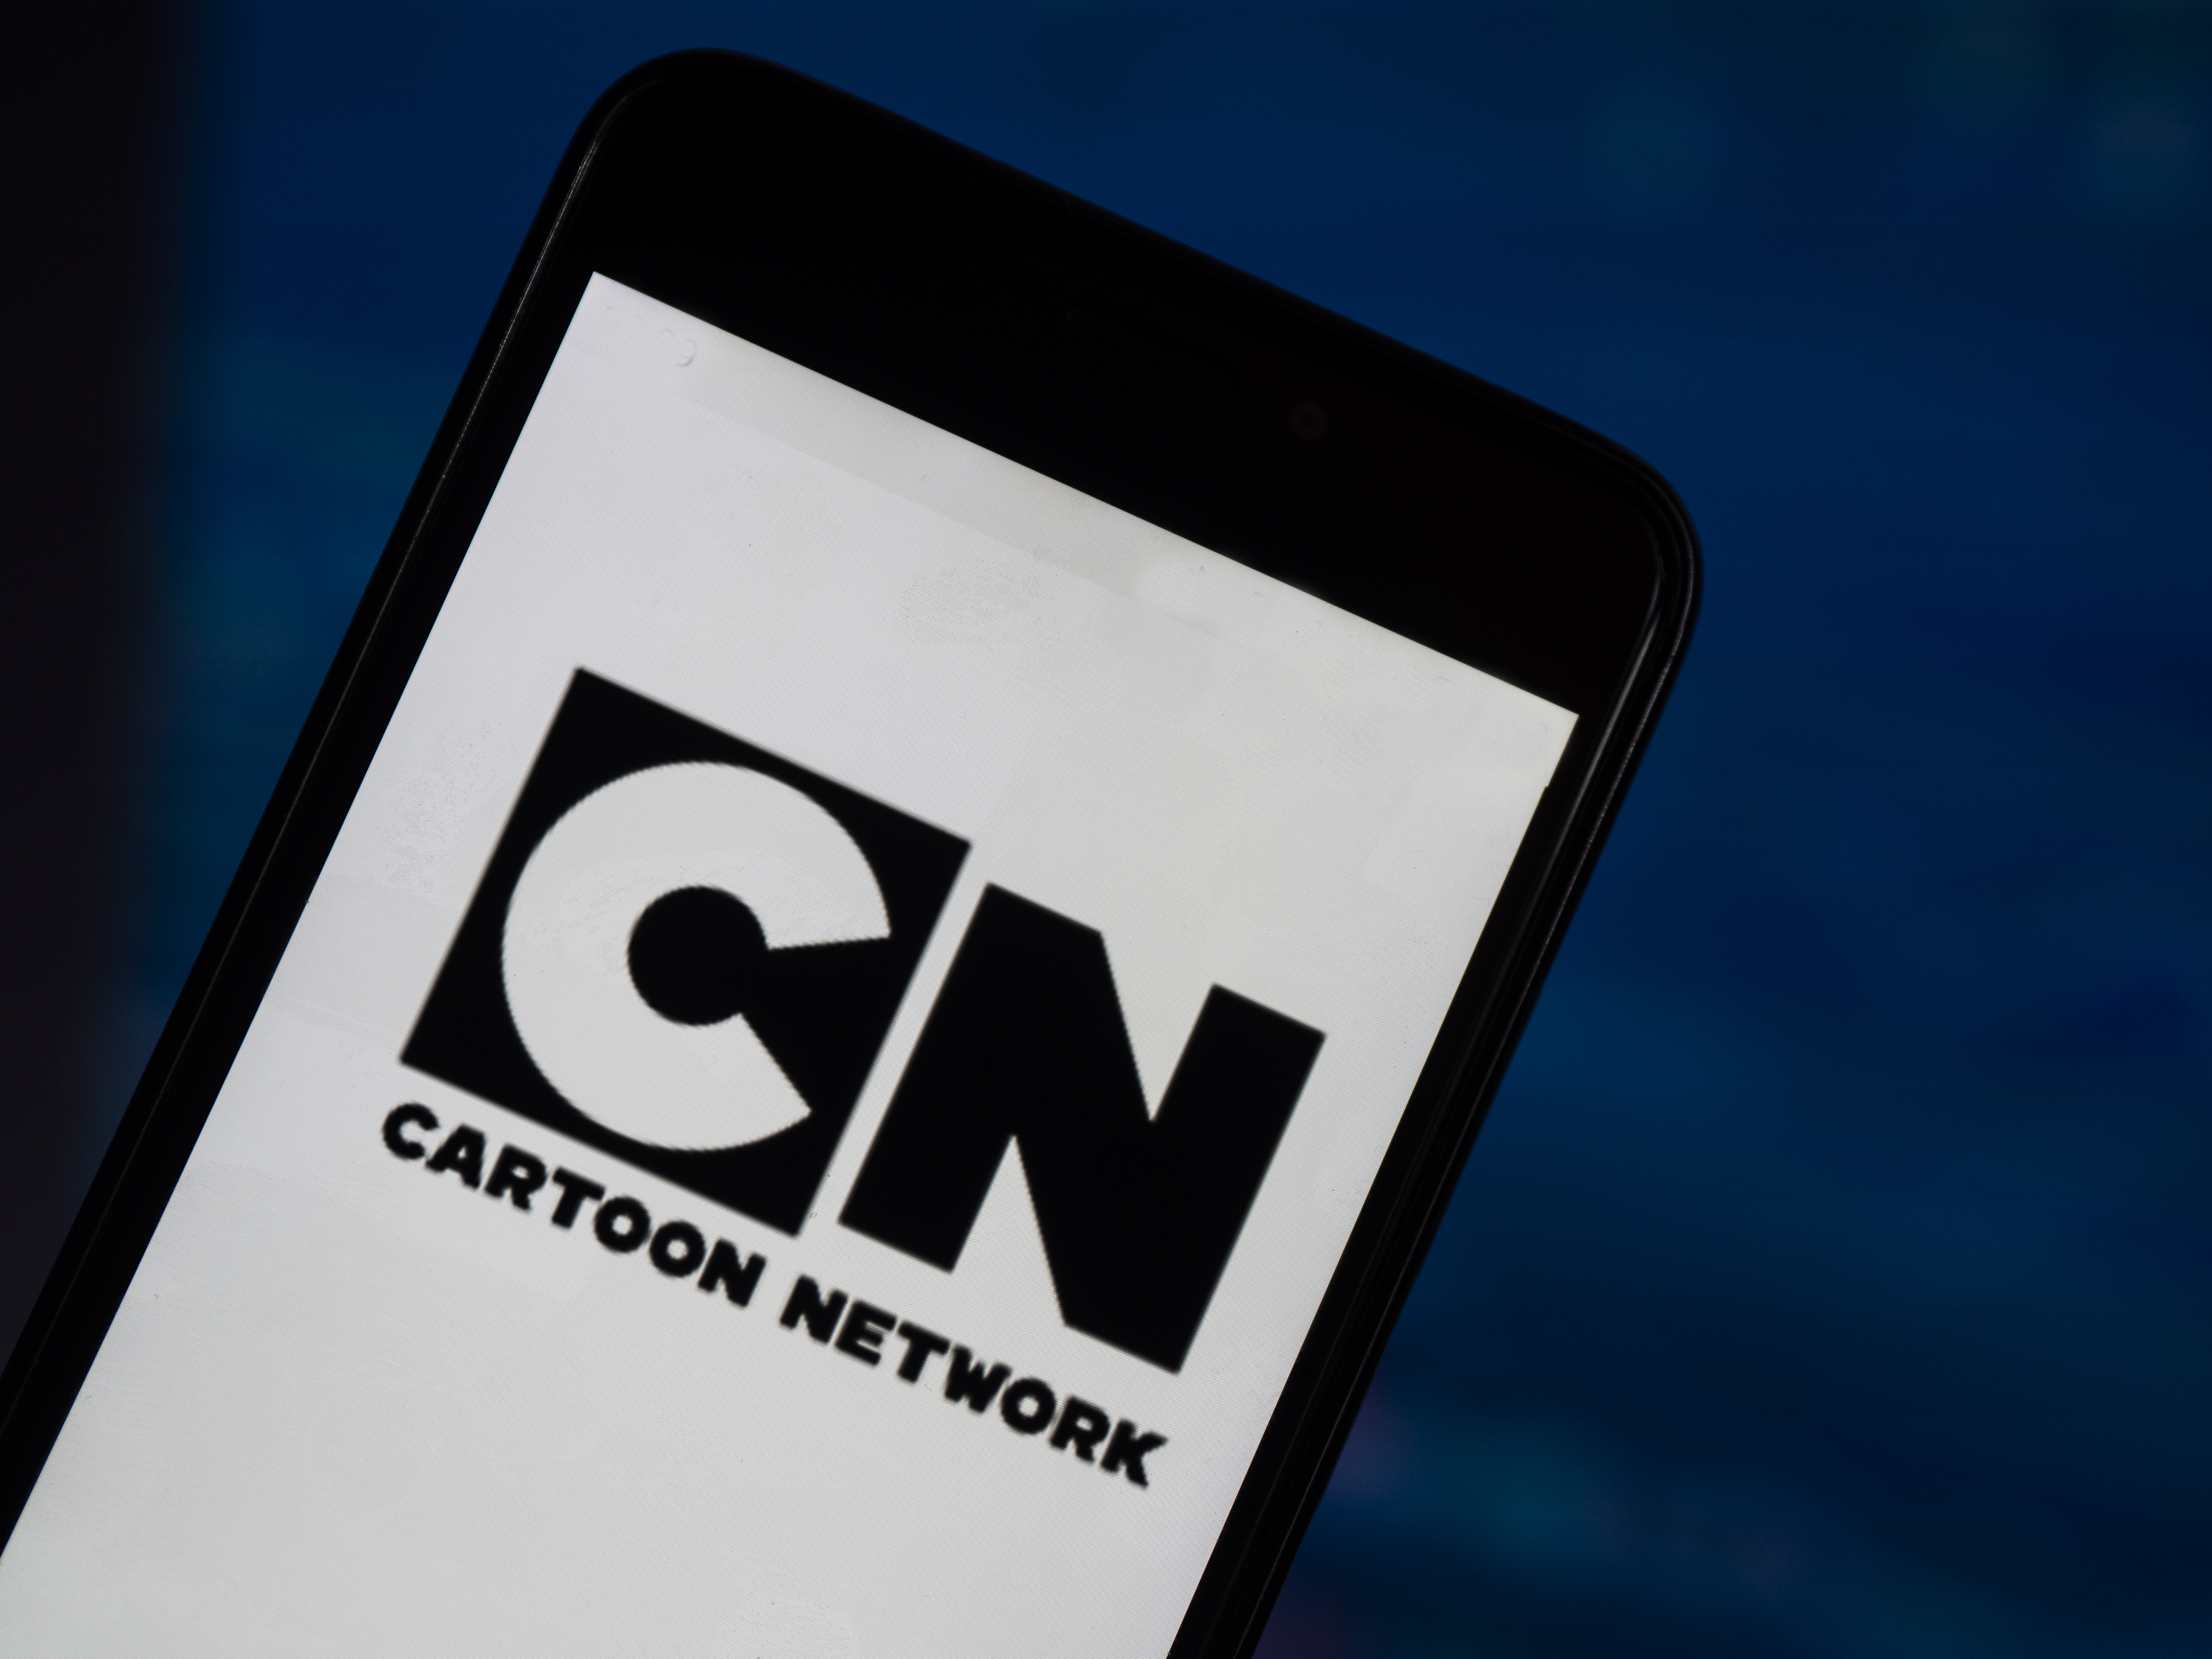 Cartoon Network confirmed it is not shutting down despite the online rumors